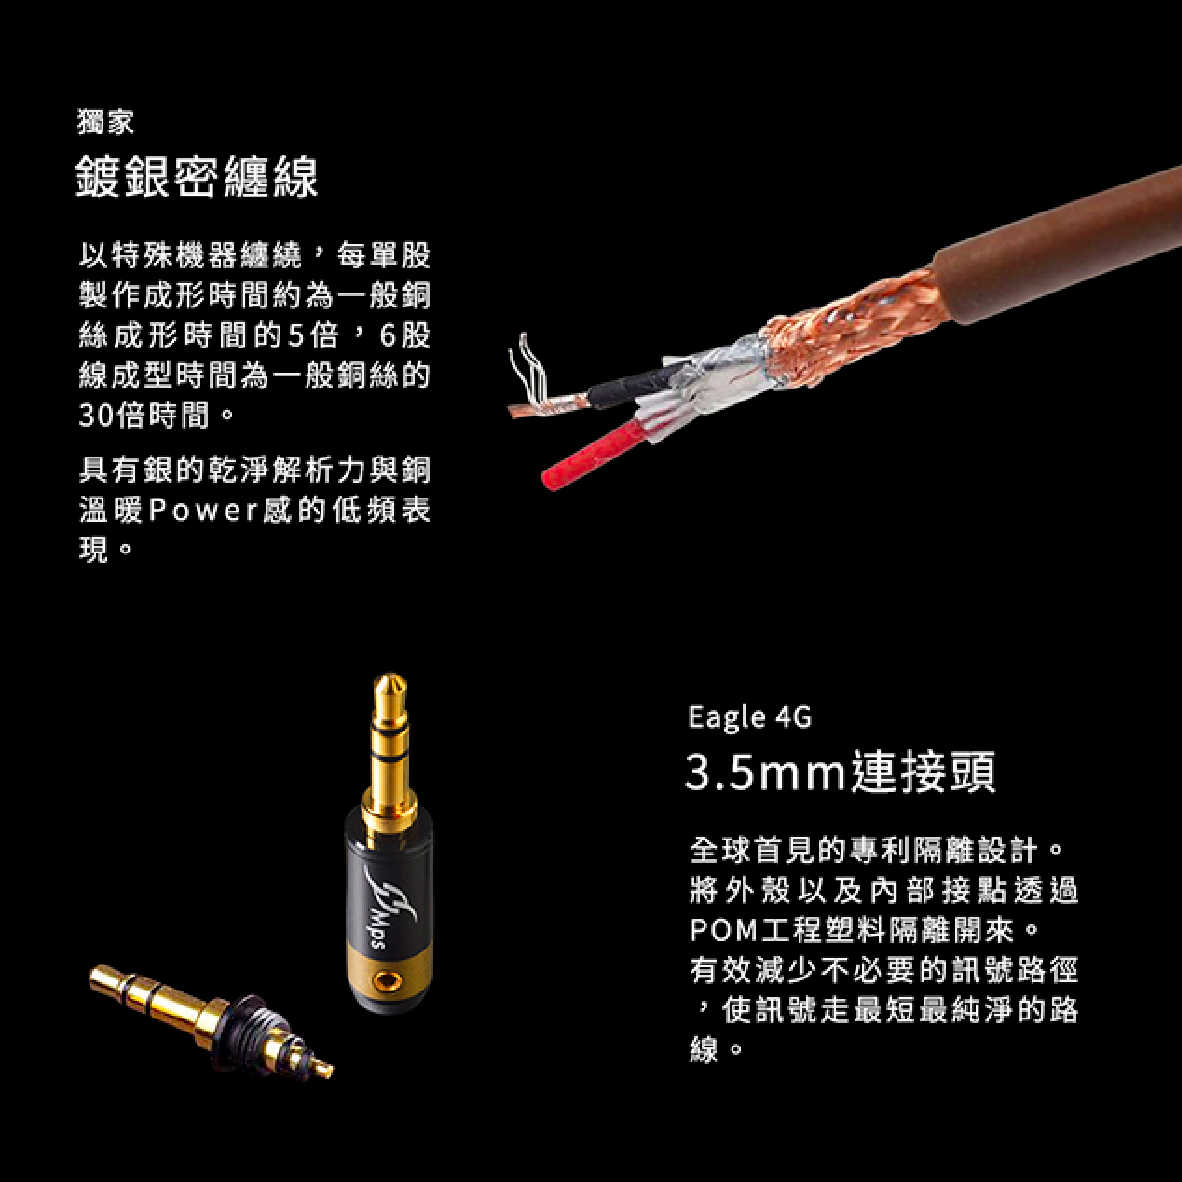 MPS Eagle Saviah 山 鍍銀密纏線 3.5mm AUX Hi-Fi 對錄線 台灣品牌 | 金曲音響